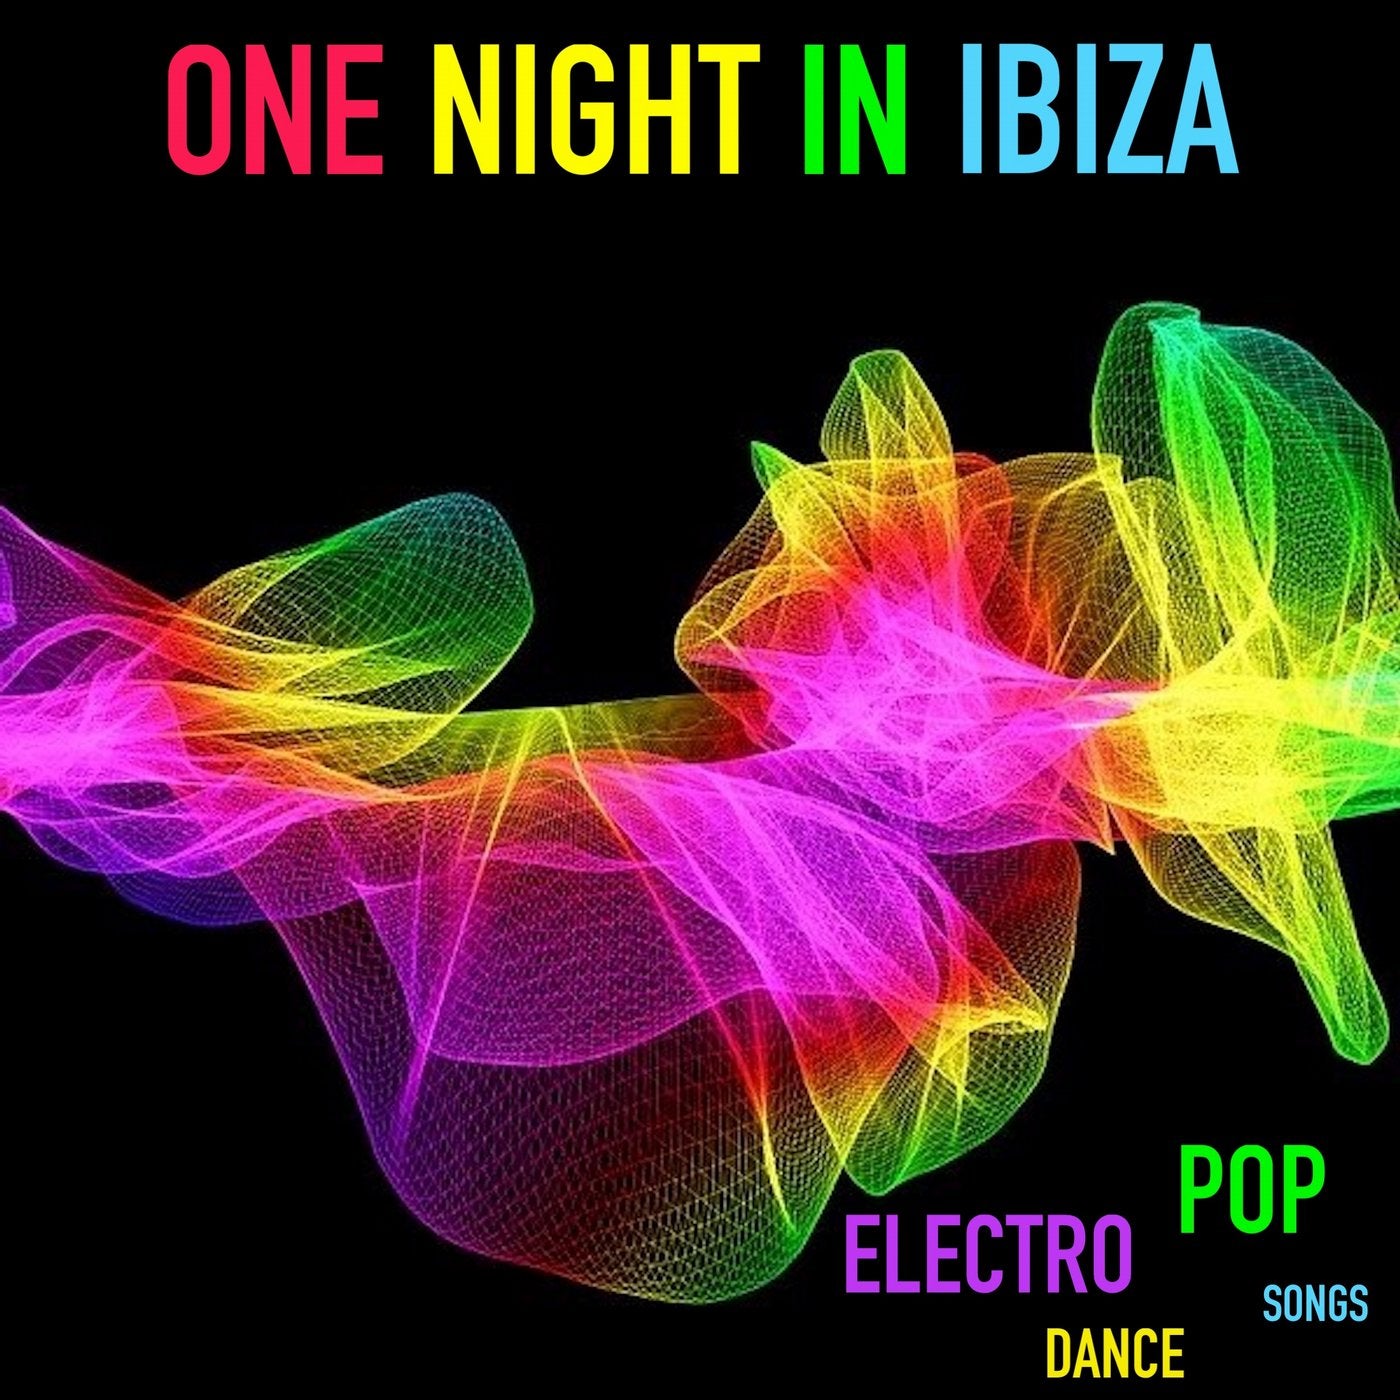 One Night In Ibiza (Electro Dance Pop Songs)